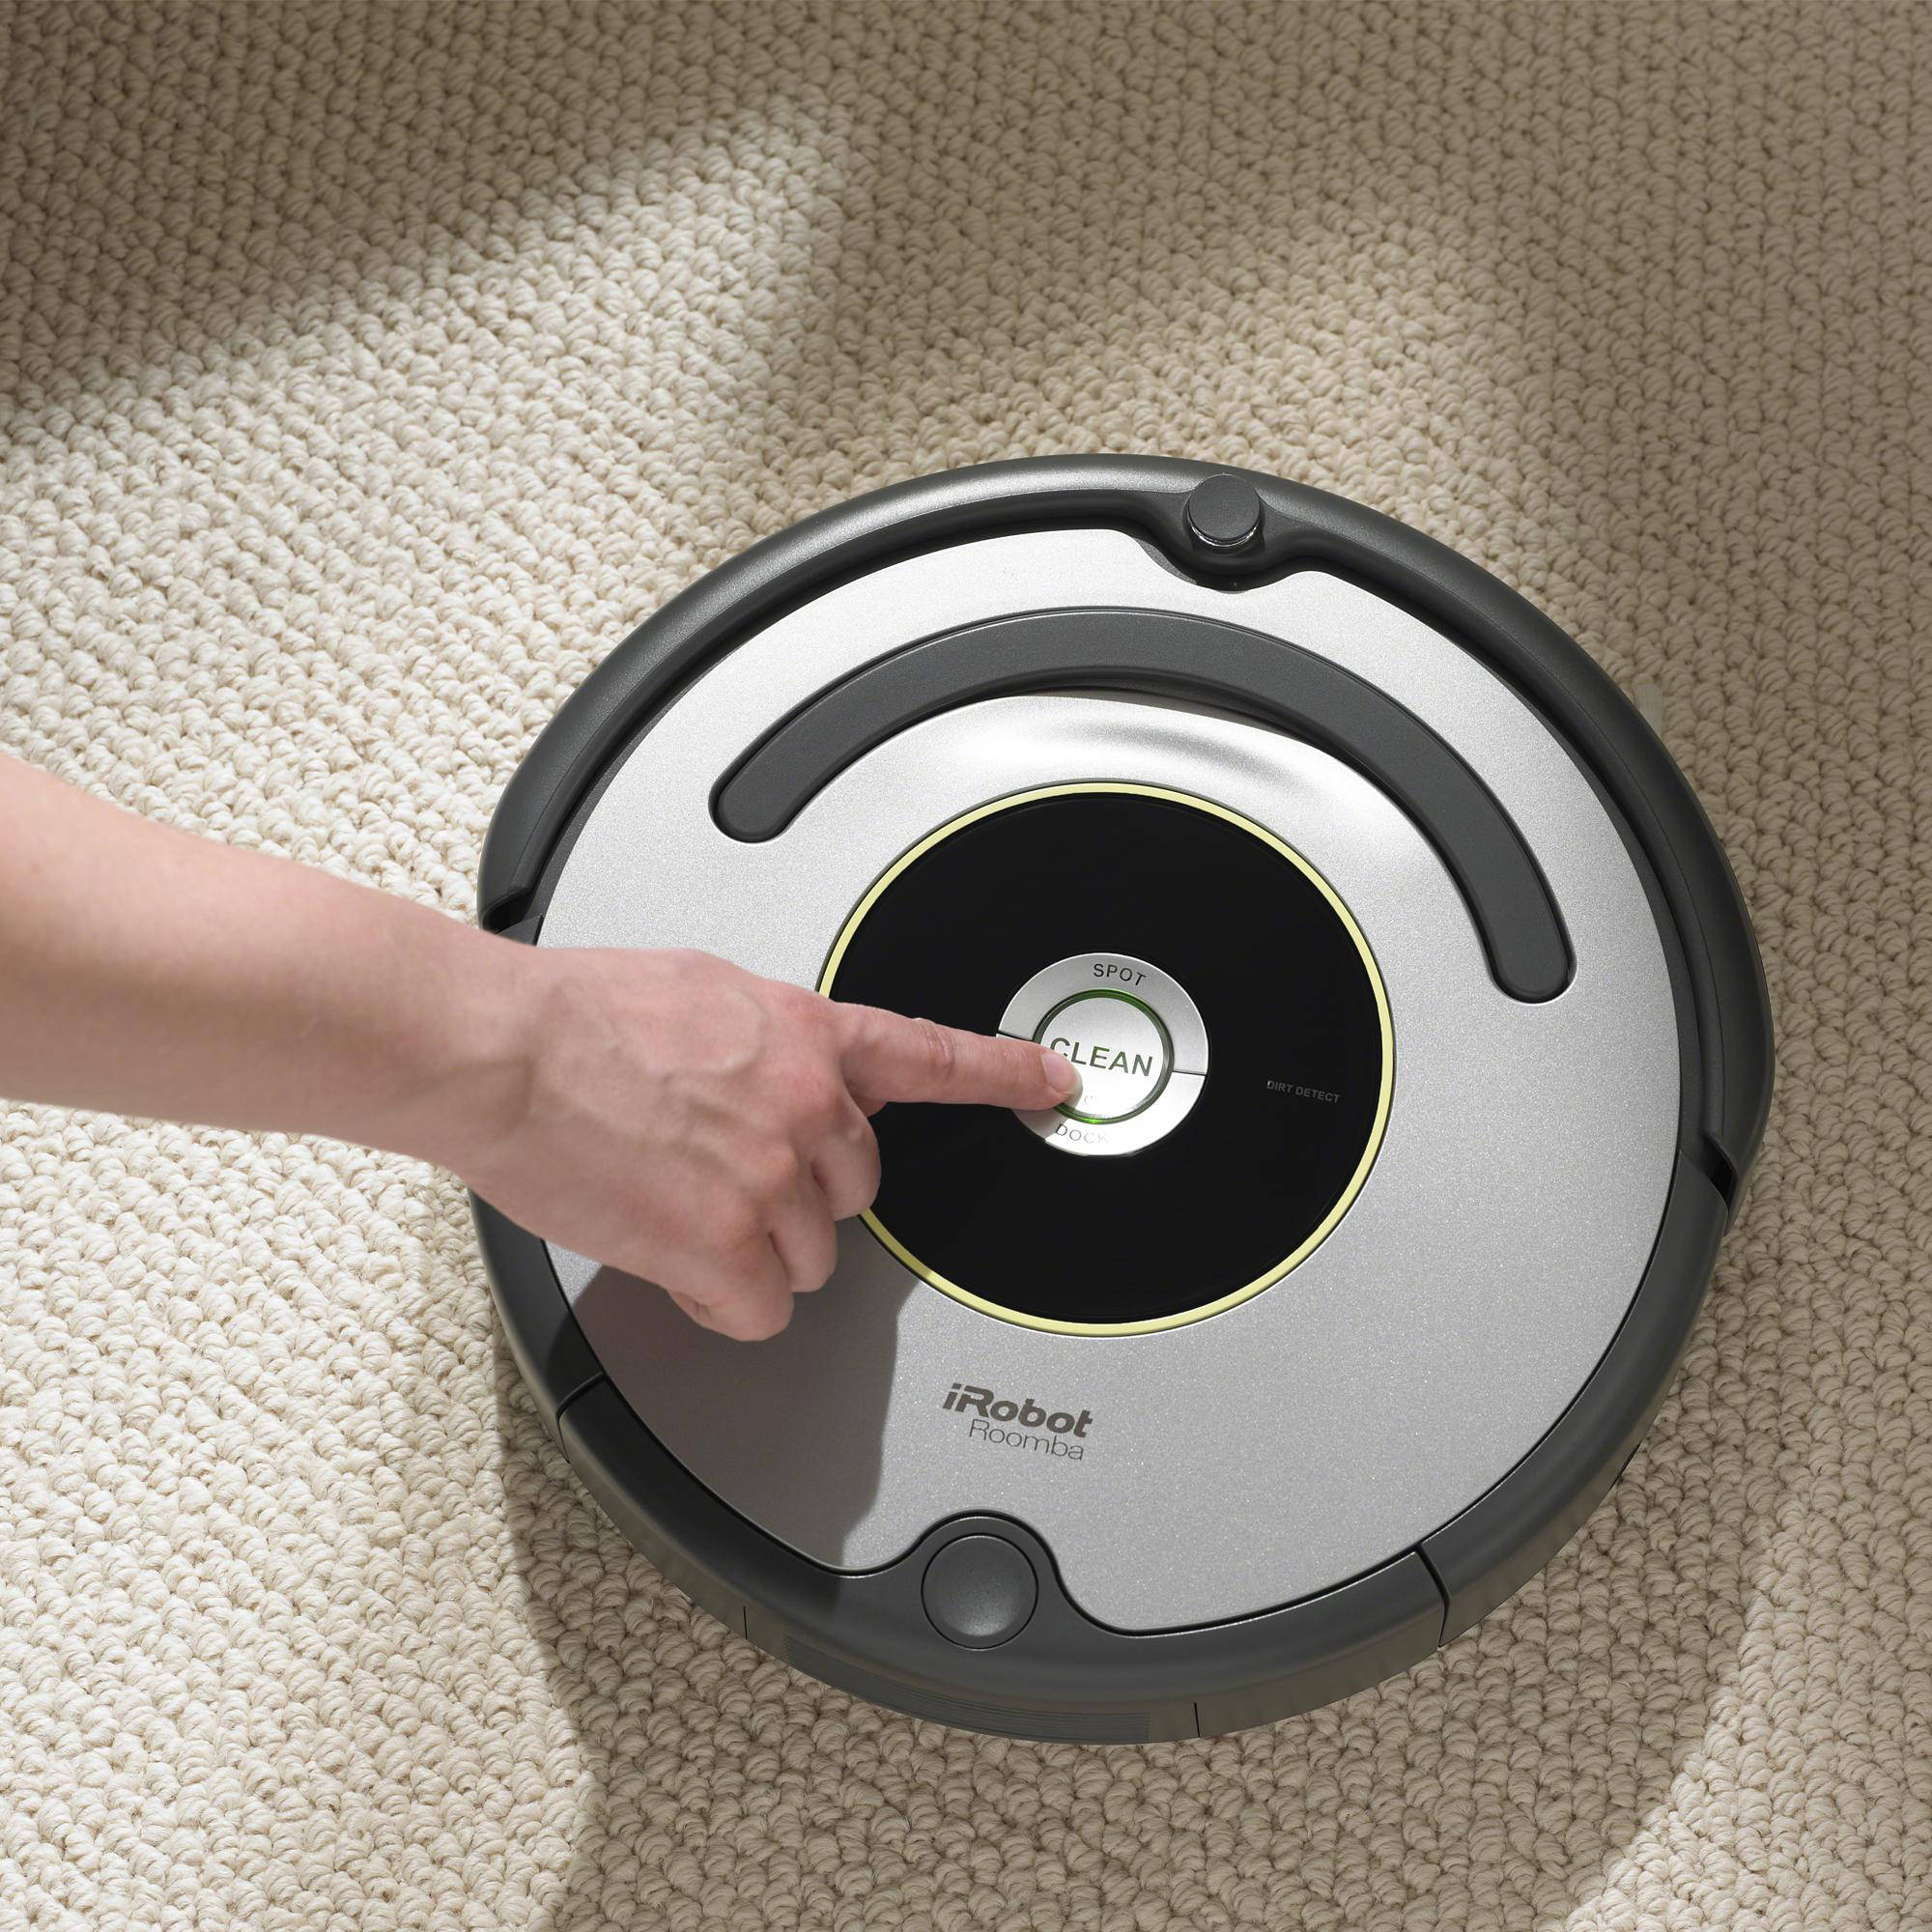 iRobot Roomba 618 Robot Vacuum - Good for Pet Hair, Carpets, Hard Floors, Self-Charging - image 3 of 6